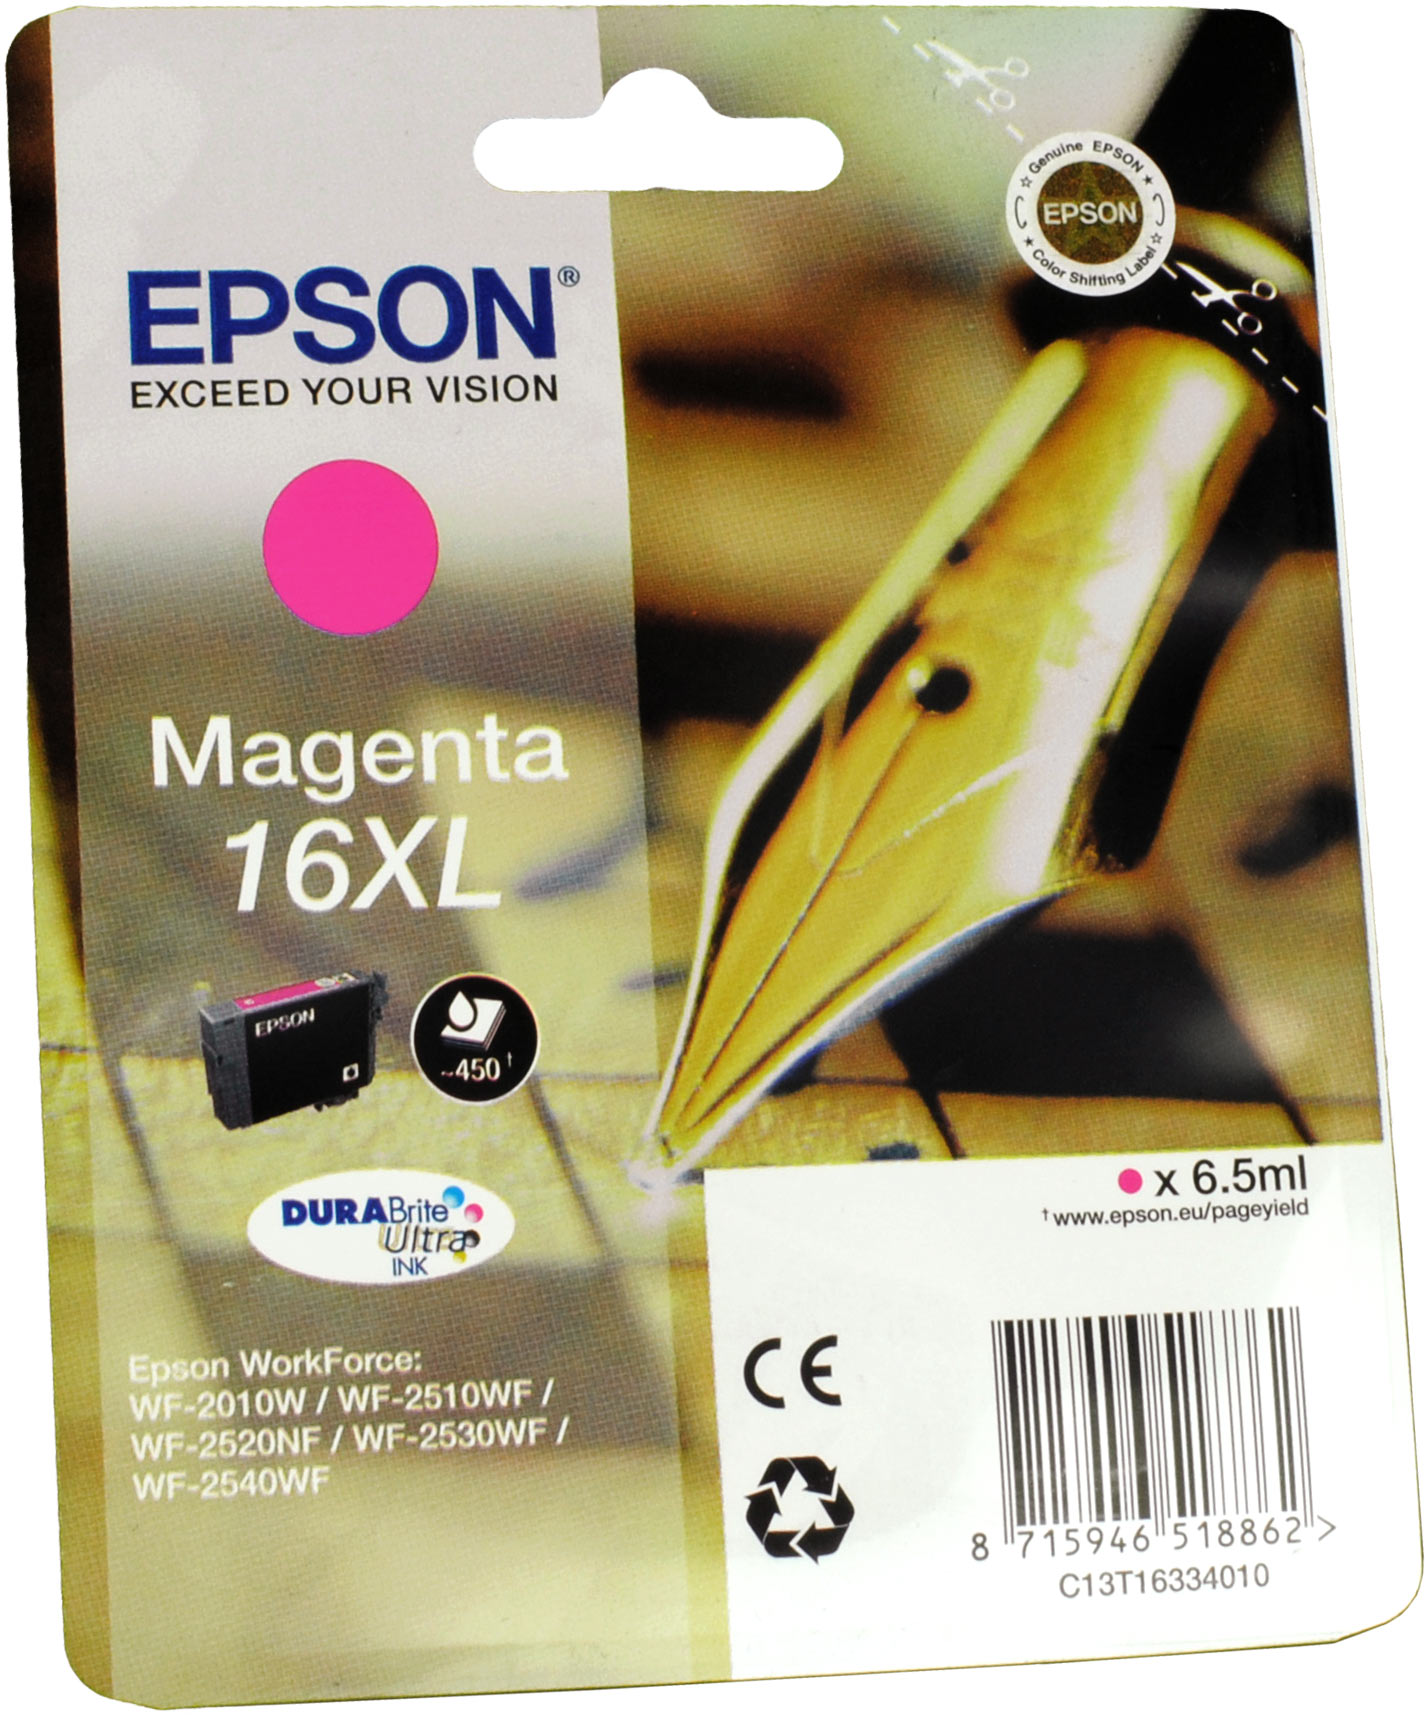 Epson Tinte C13T16334012 Magenta 16XL  magenta